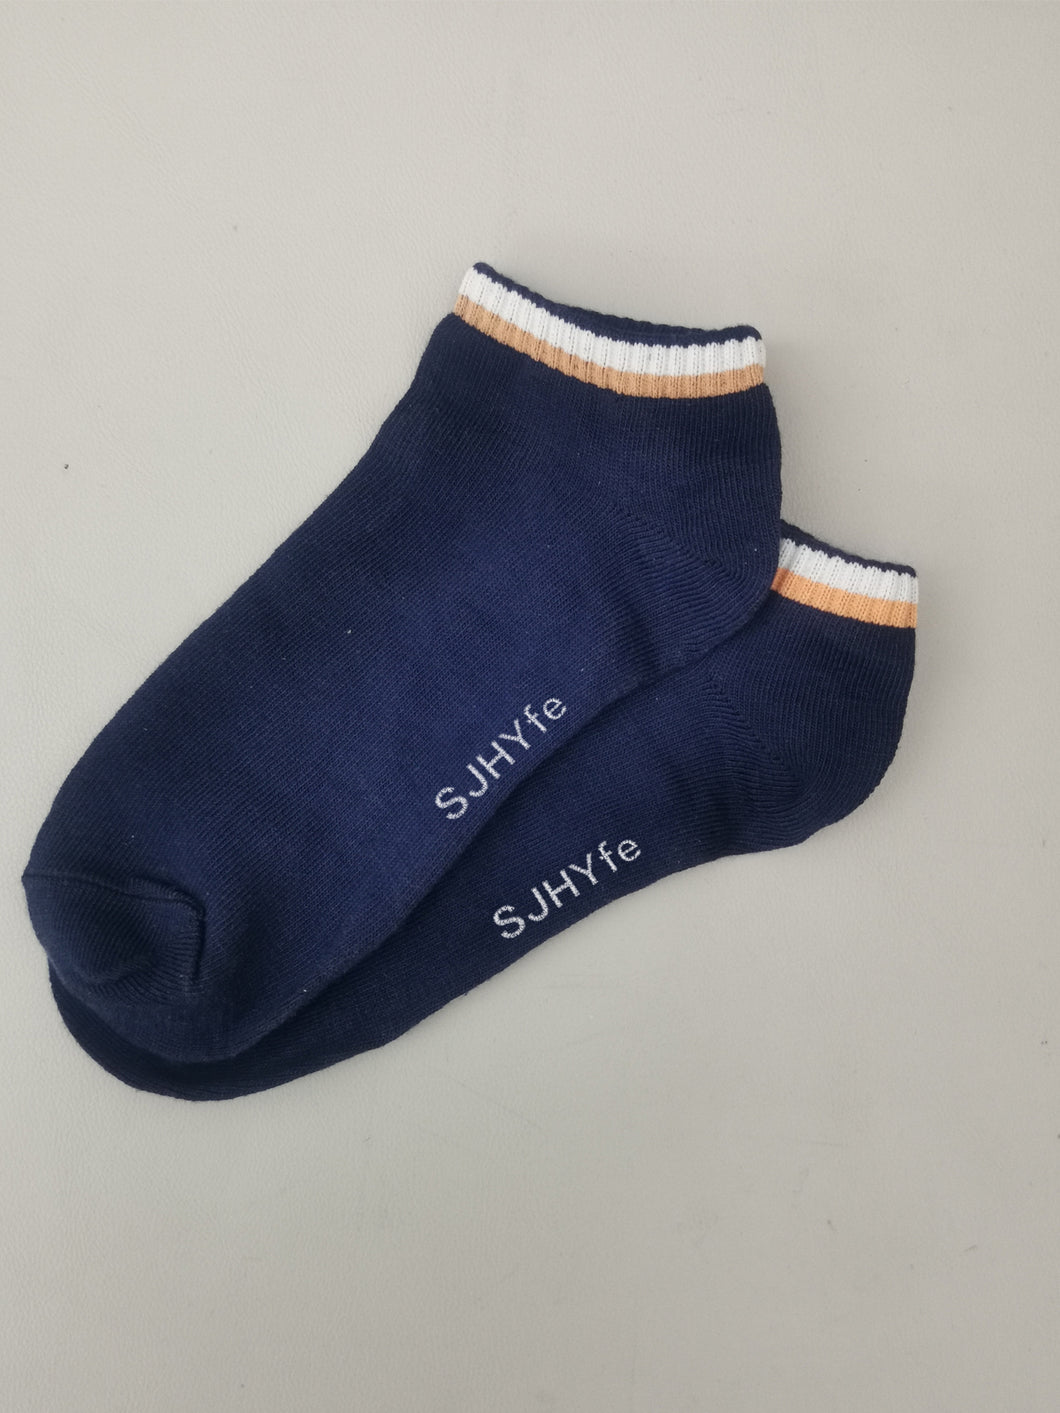 SJHYfe socks, men's defensive cushioning sports daily socks